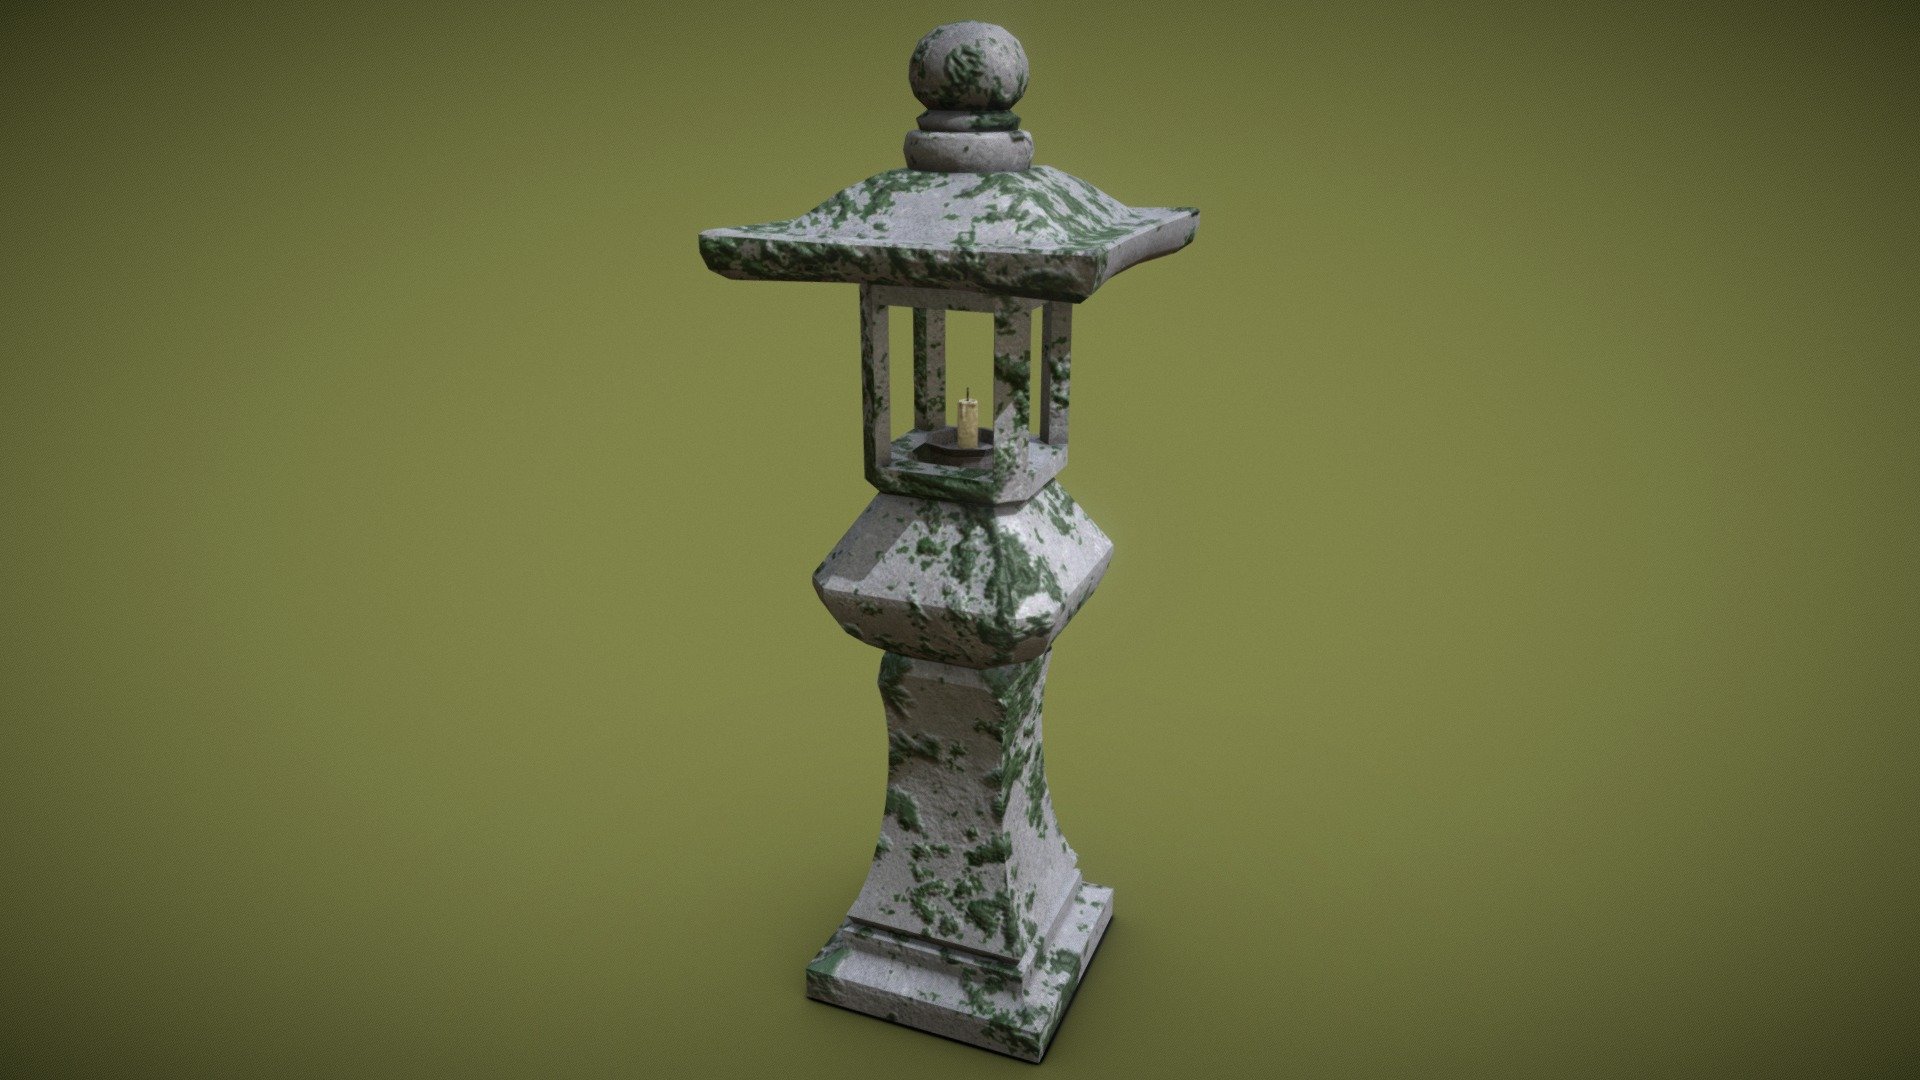 Free Stone Lantern Asset.
Created in Maya, Textured in Substance Painter, Rendered in Marmoset Toolbag.
Renders: https://www.artstation.com/artwork/VgBlPX - Stone Lantern - Download Free 3D model by Jamie McFarlane (@jamiemcfarlane) 3d model